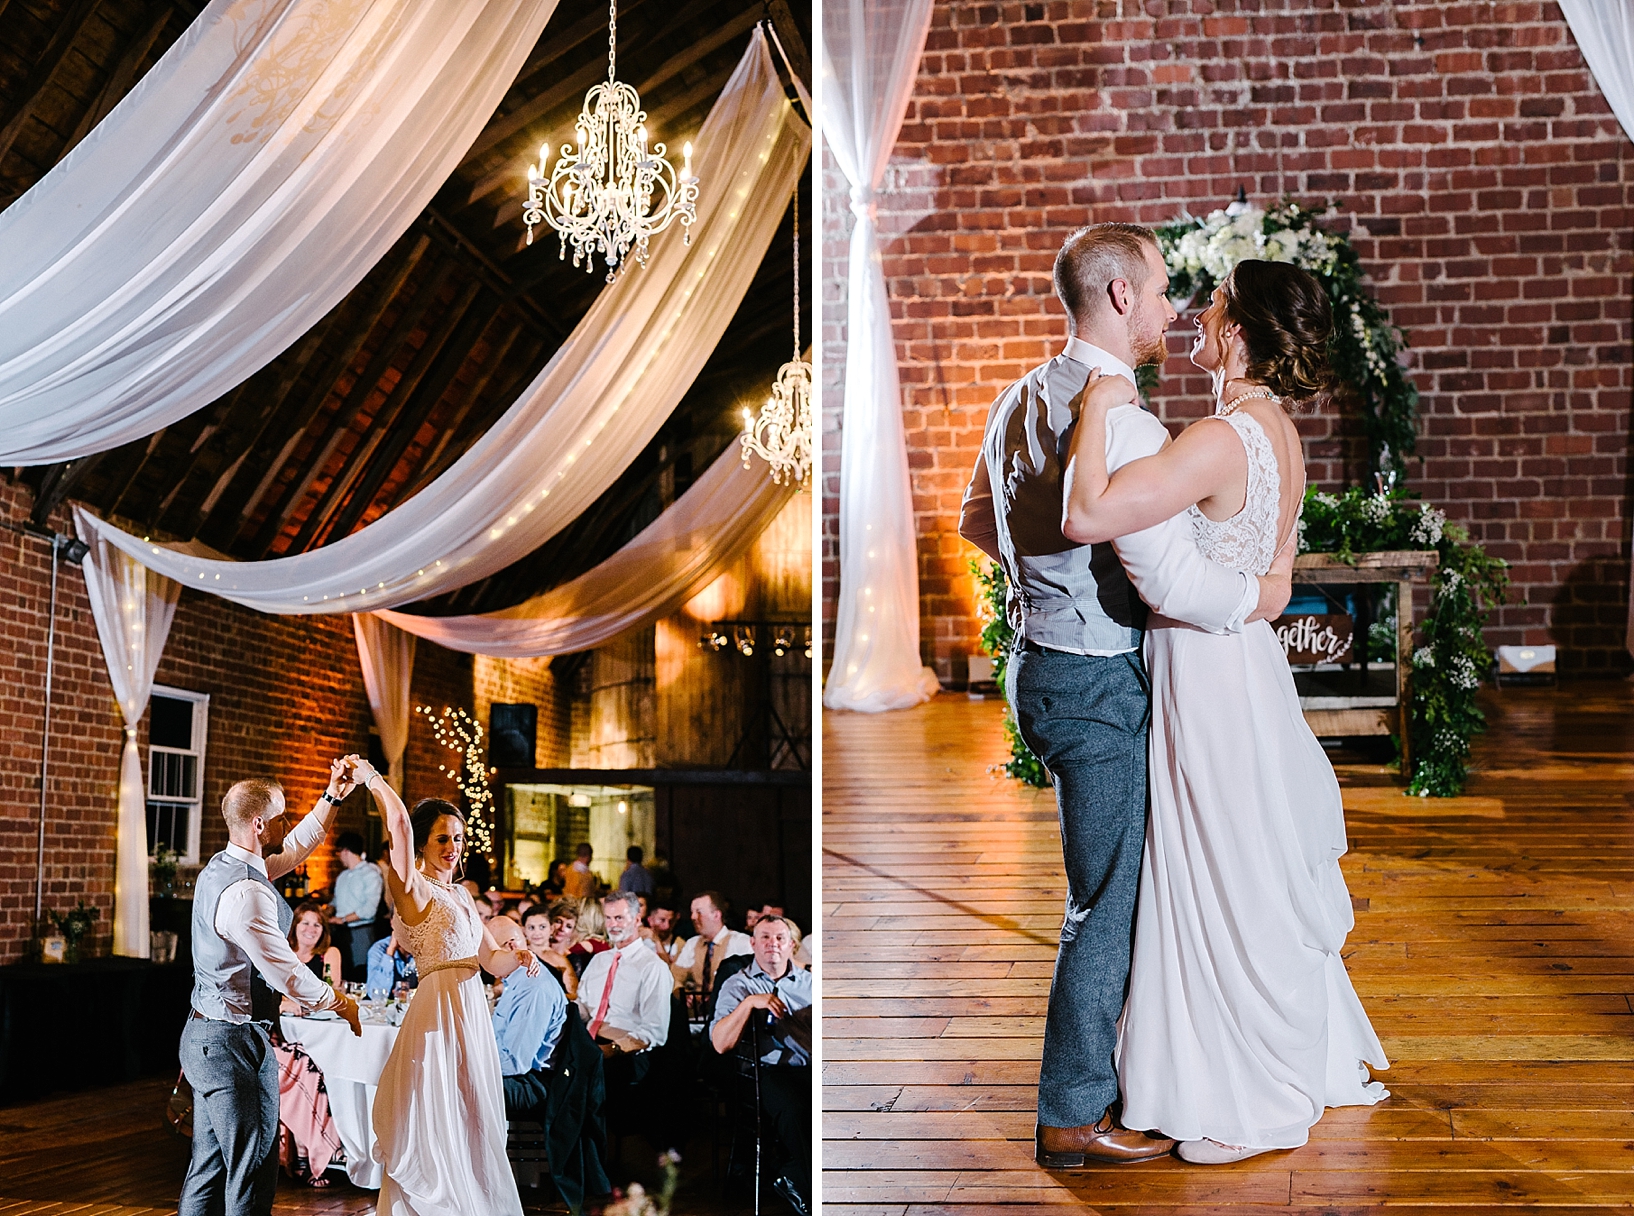 bride and groom's first dance Stone Ledge Farm wedding reception